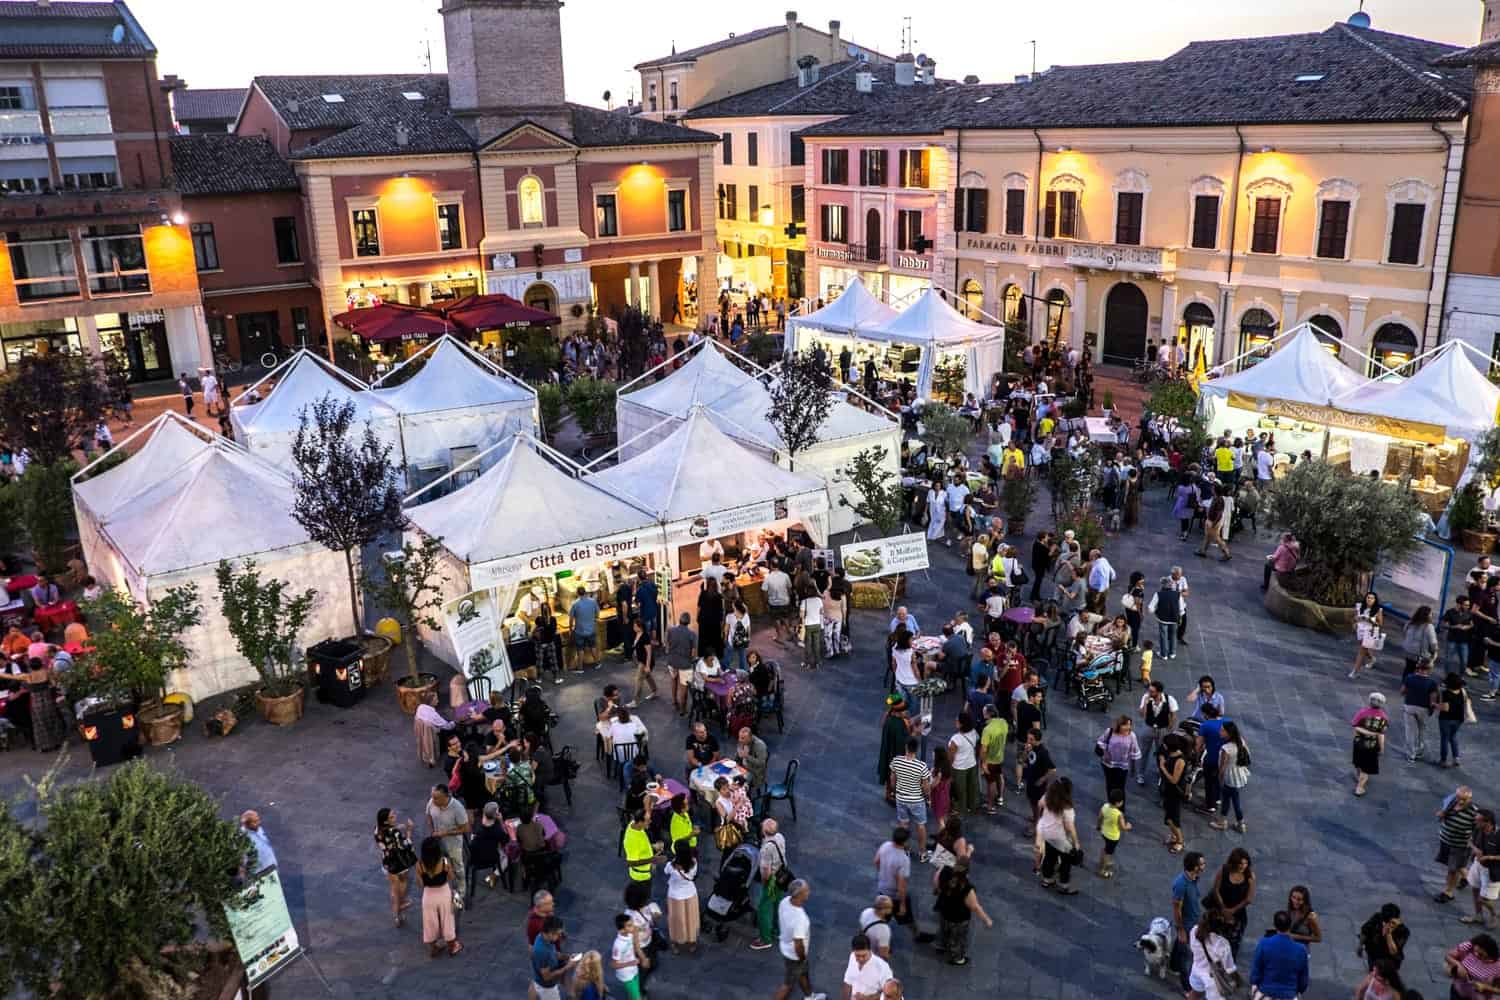 Food tents at the Artusi festival / ‘Festa Artusiana’ in Forlimpopoli in Emilia Romagna, Italy